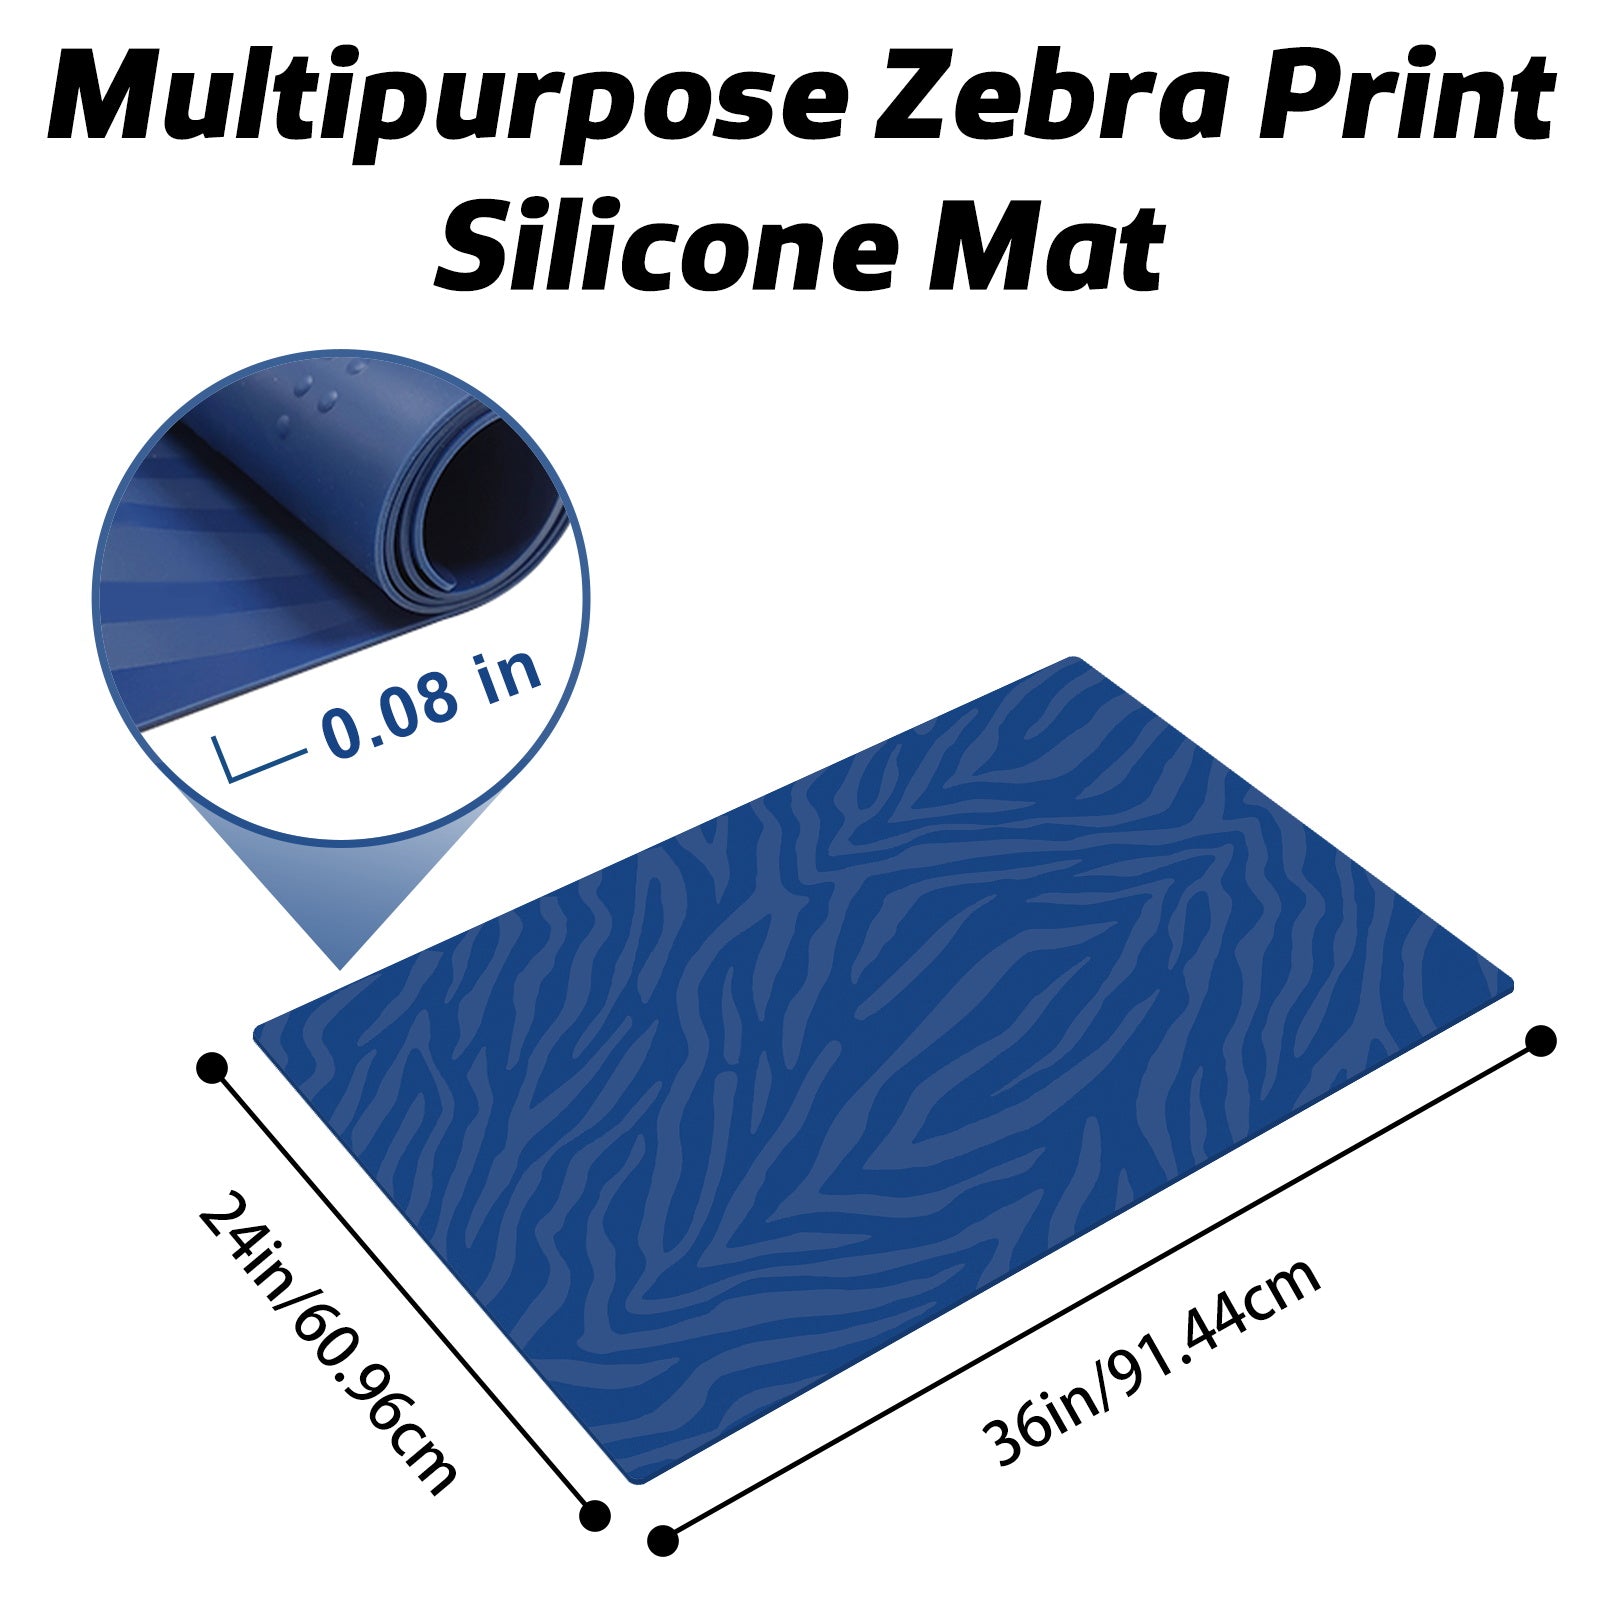 AECHY Zebra Print Heat Resistant Silicone Mat 36"×24"×0.08"